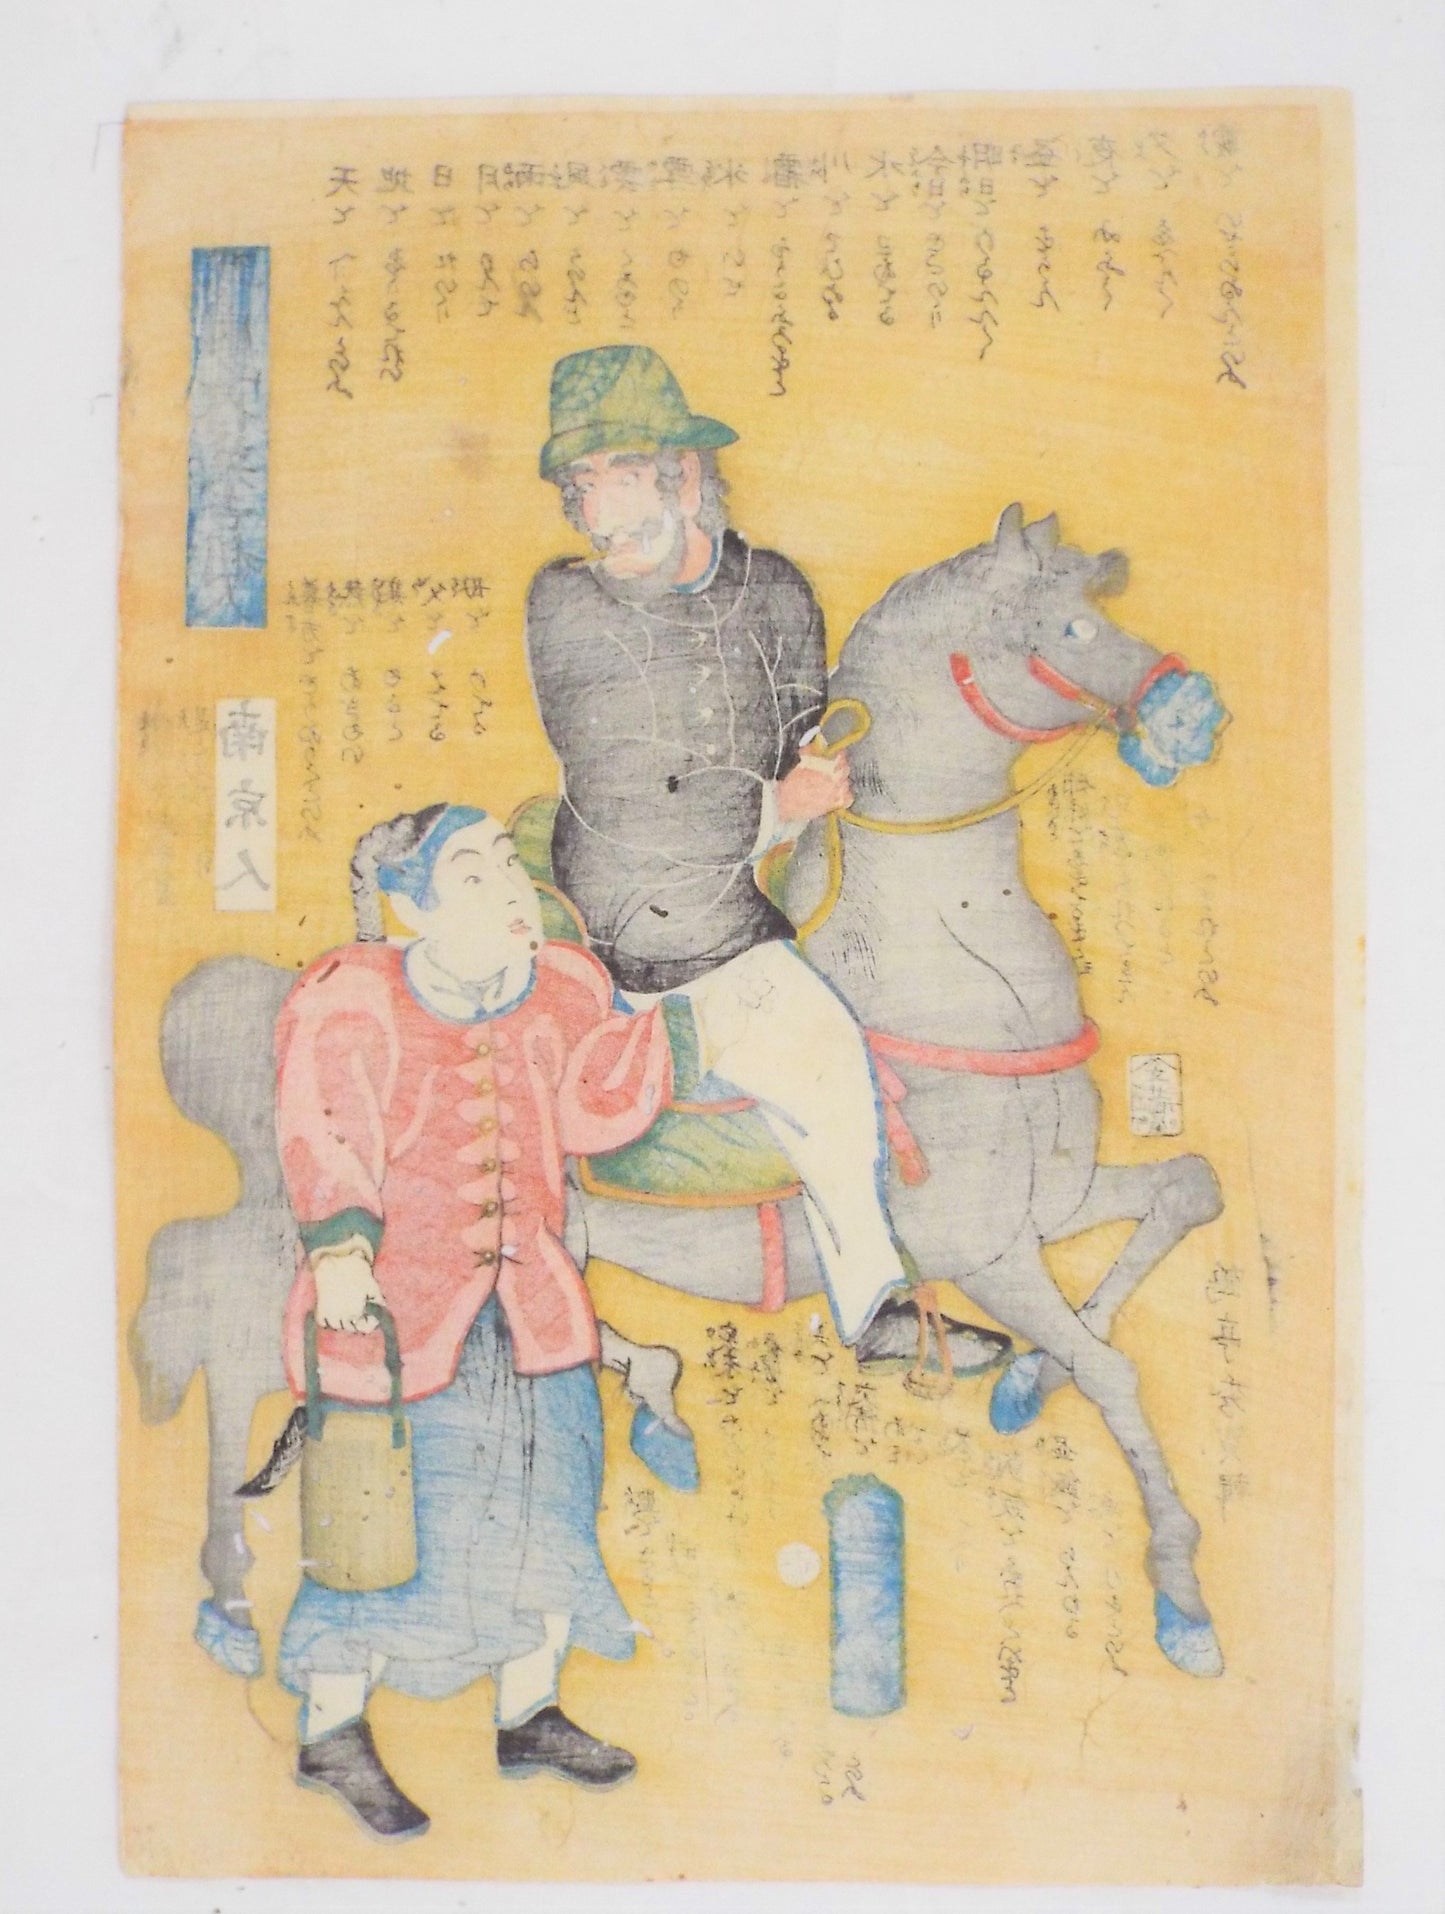 English-man and Chinese man by Kunihisa / Anglais et Chinois par Kunihisa (1861)